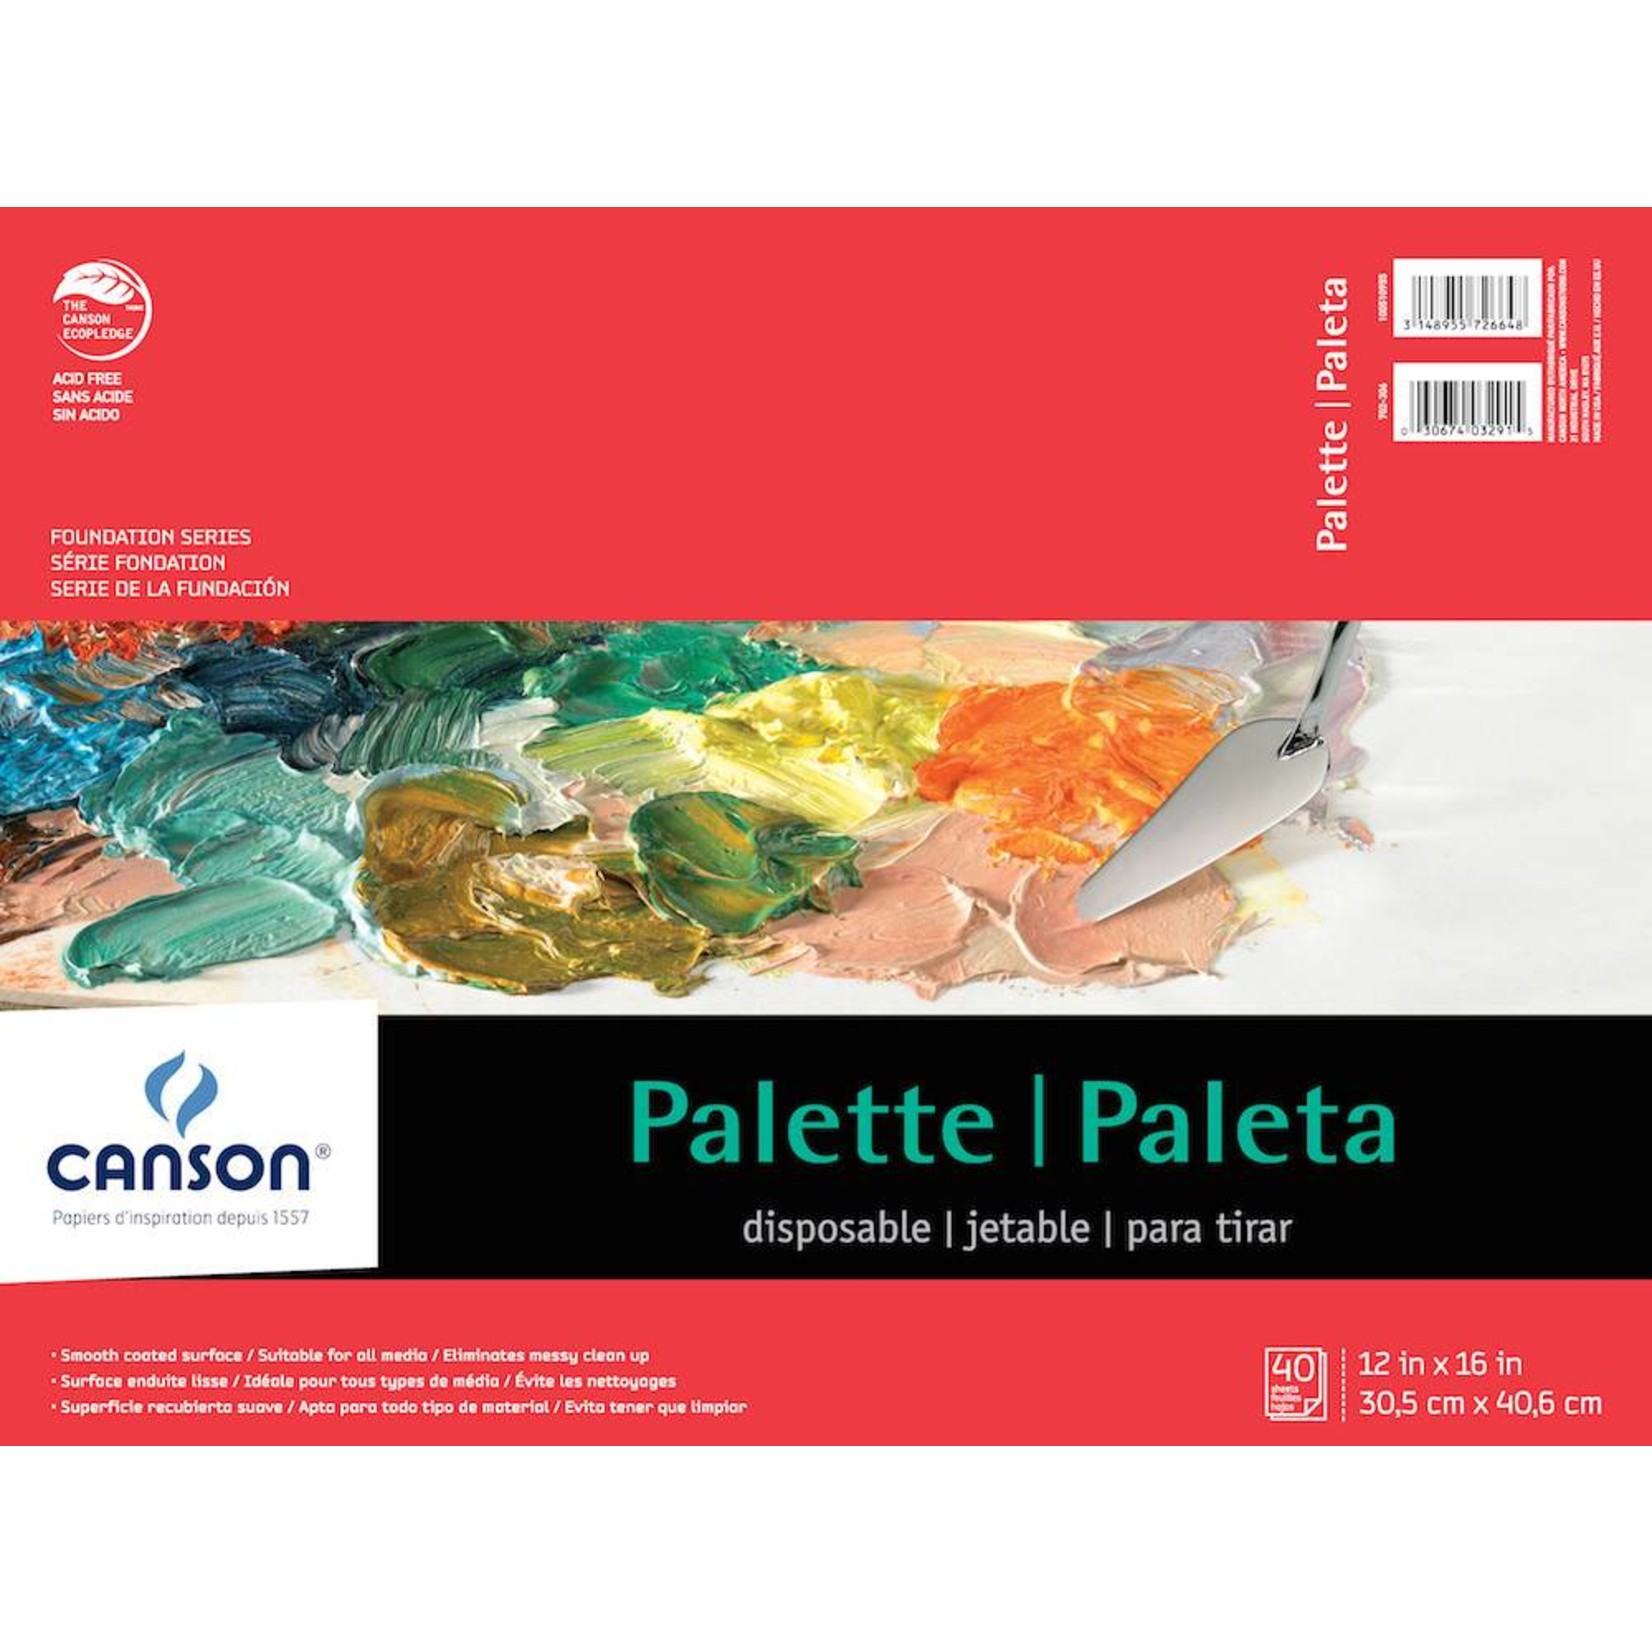 CANSON CANSON XL DISPOSABLE PALETTE 9x12